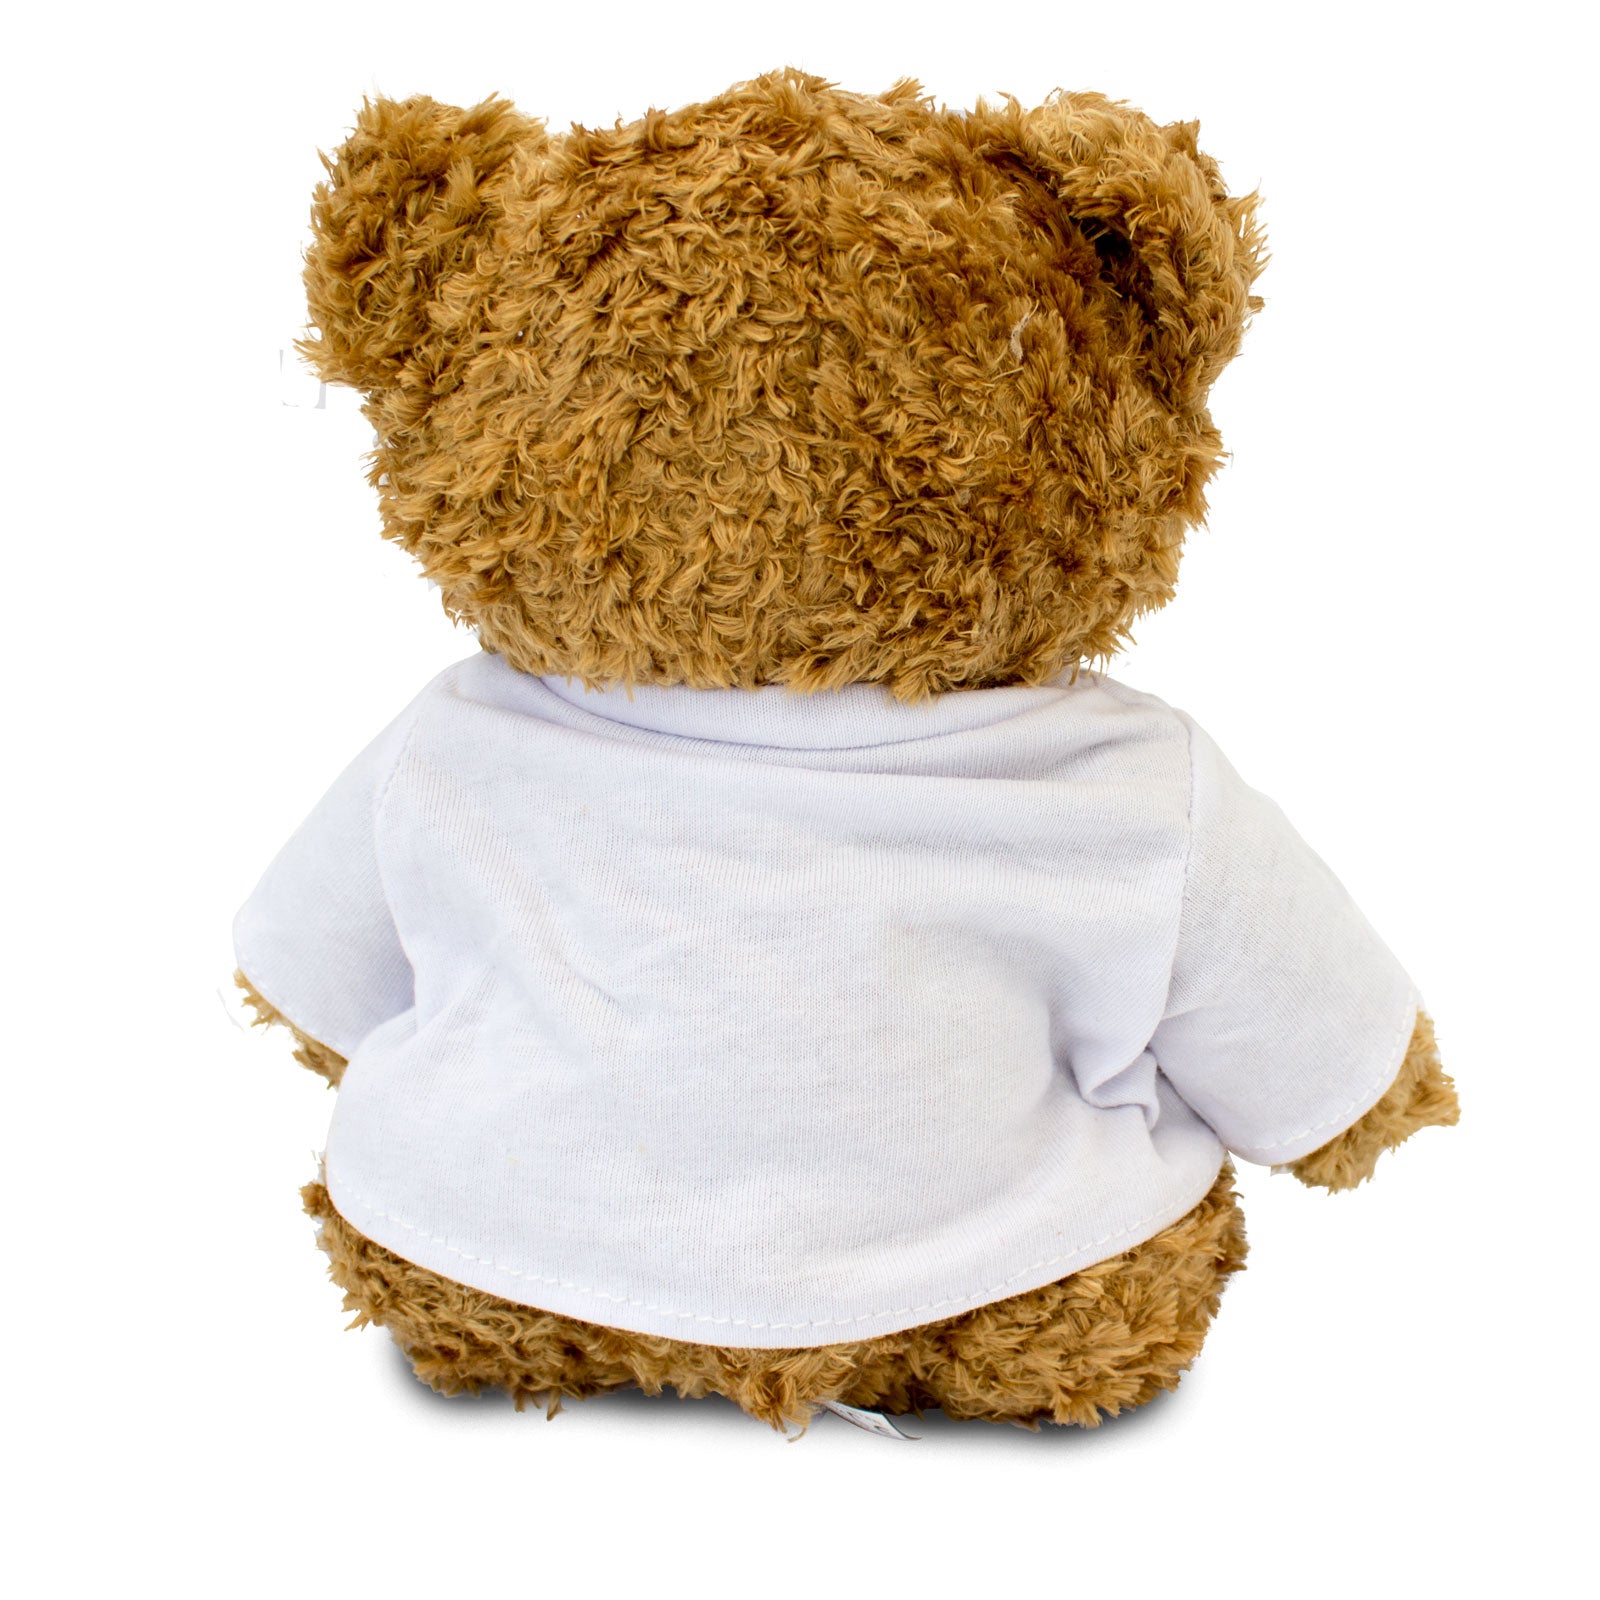 Get Well Soon Jolanda - Teddy Bear